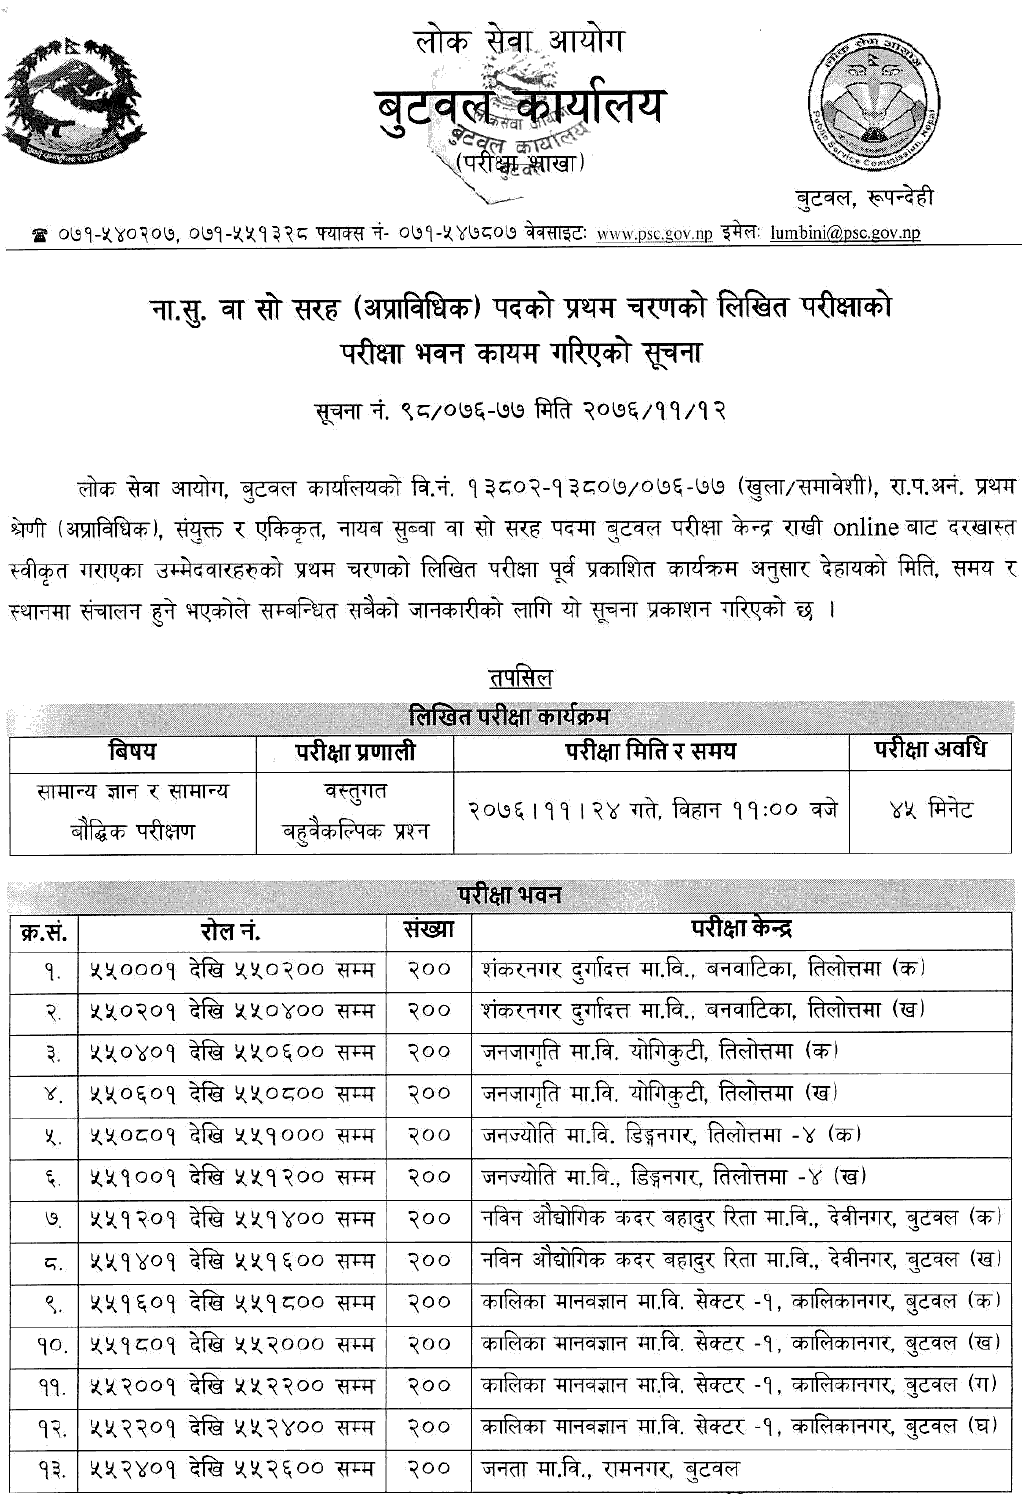 Nayab Subba First Phase Written Exam Center Butwal